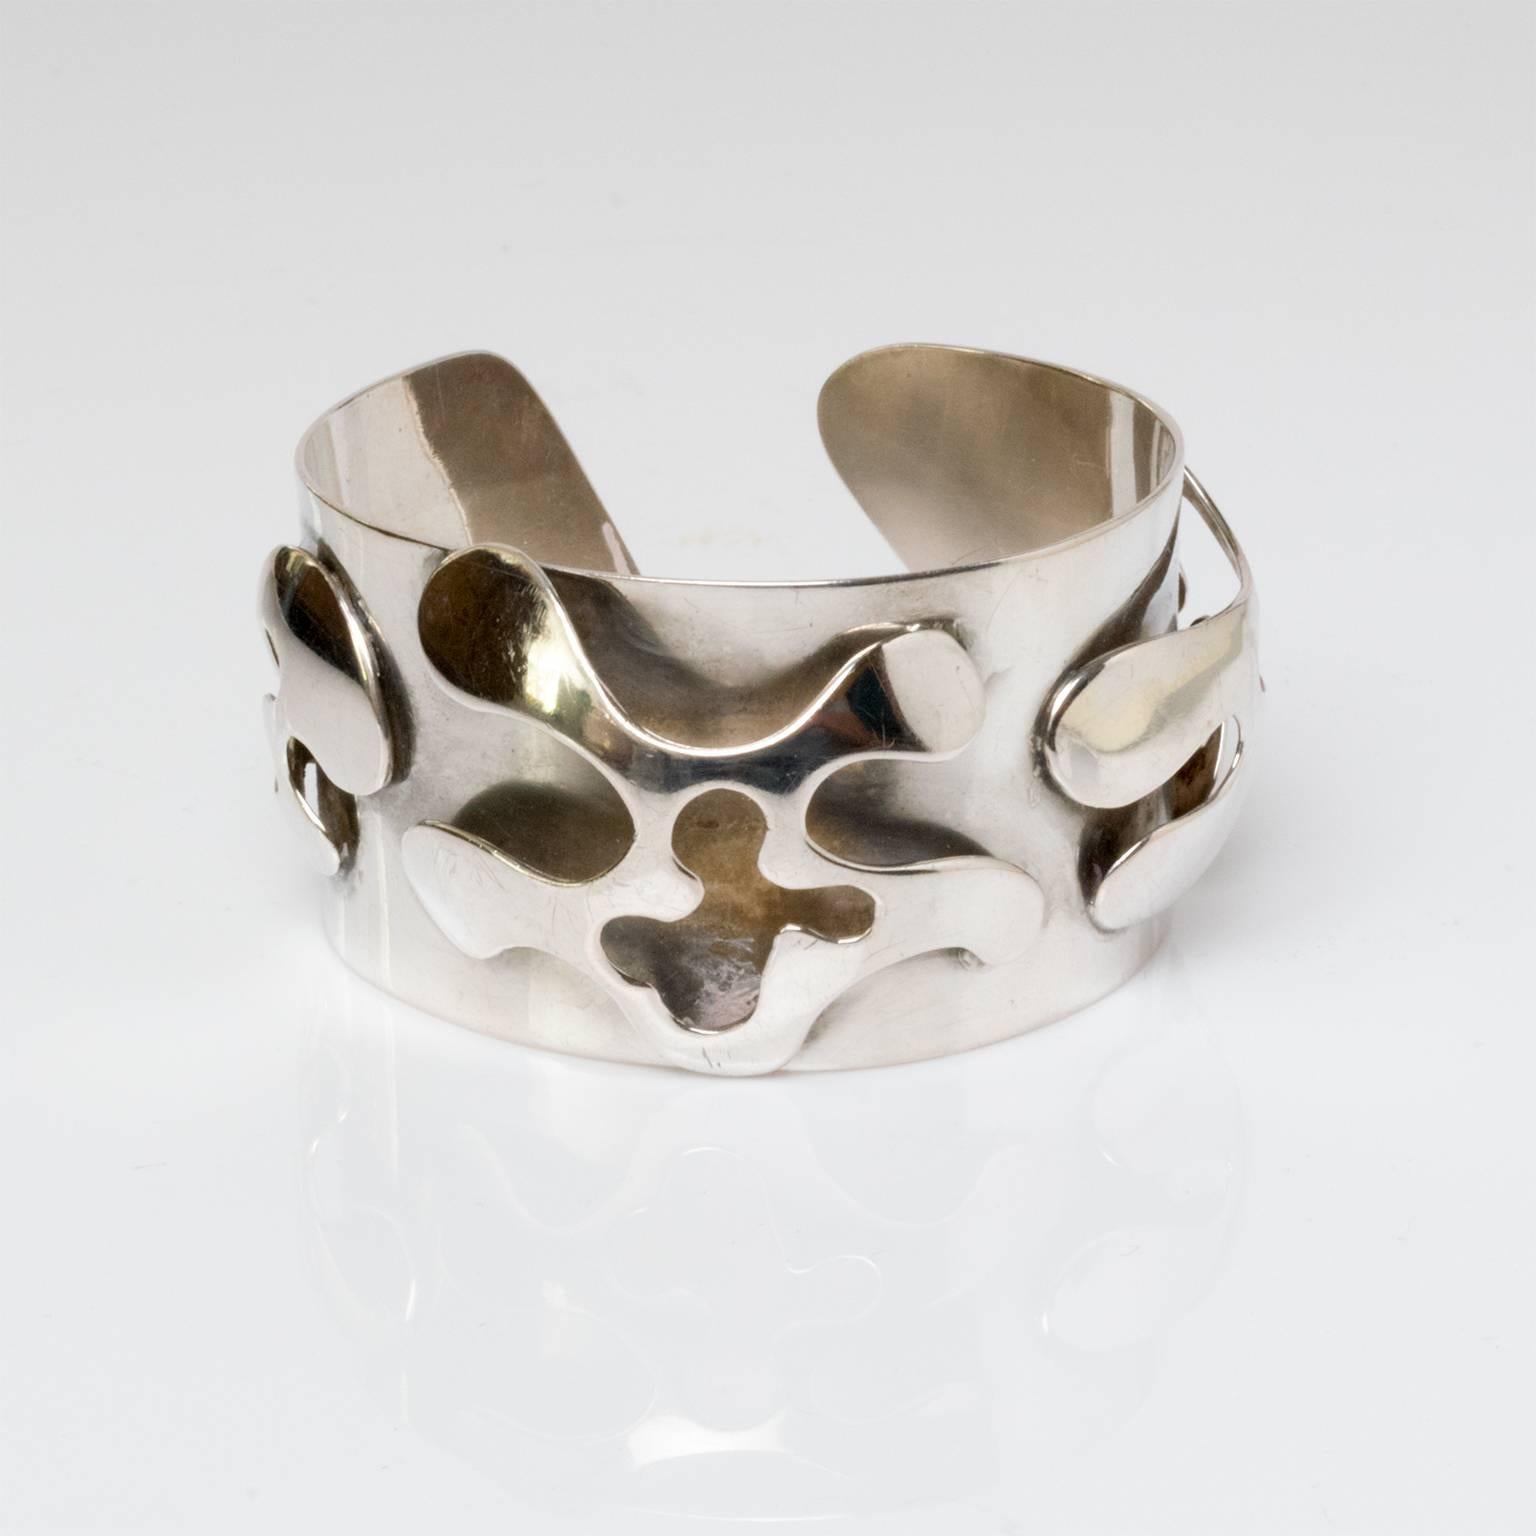 A Scandinavian modern silver bracelet with a raised cutout surface with free-form organic shapes. Designed Henry Marius Jacobsen, Copenhagen, 1960, Denmark.
Measures: Diameter: 2.5".
Height: 1.5".